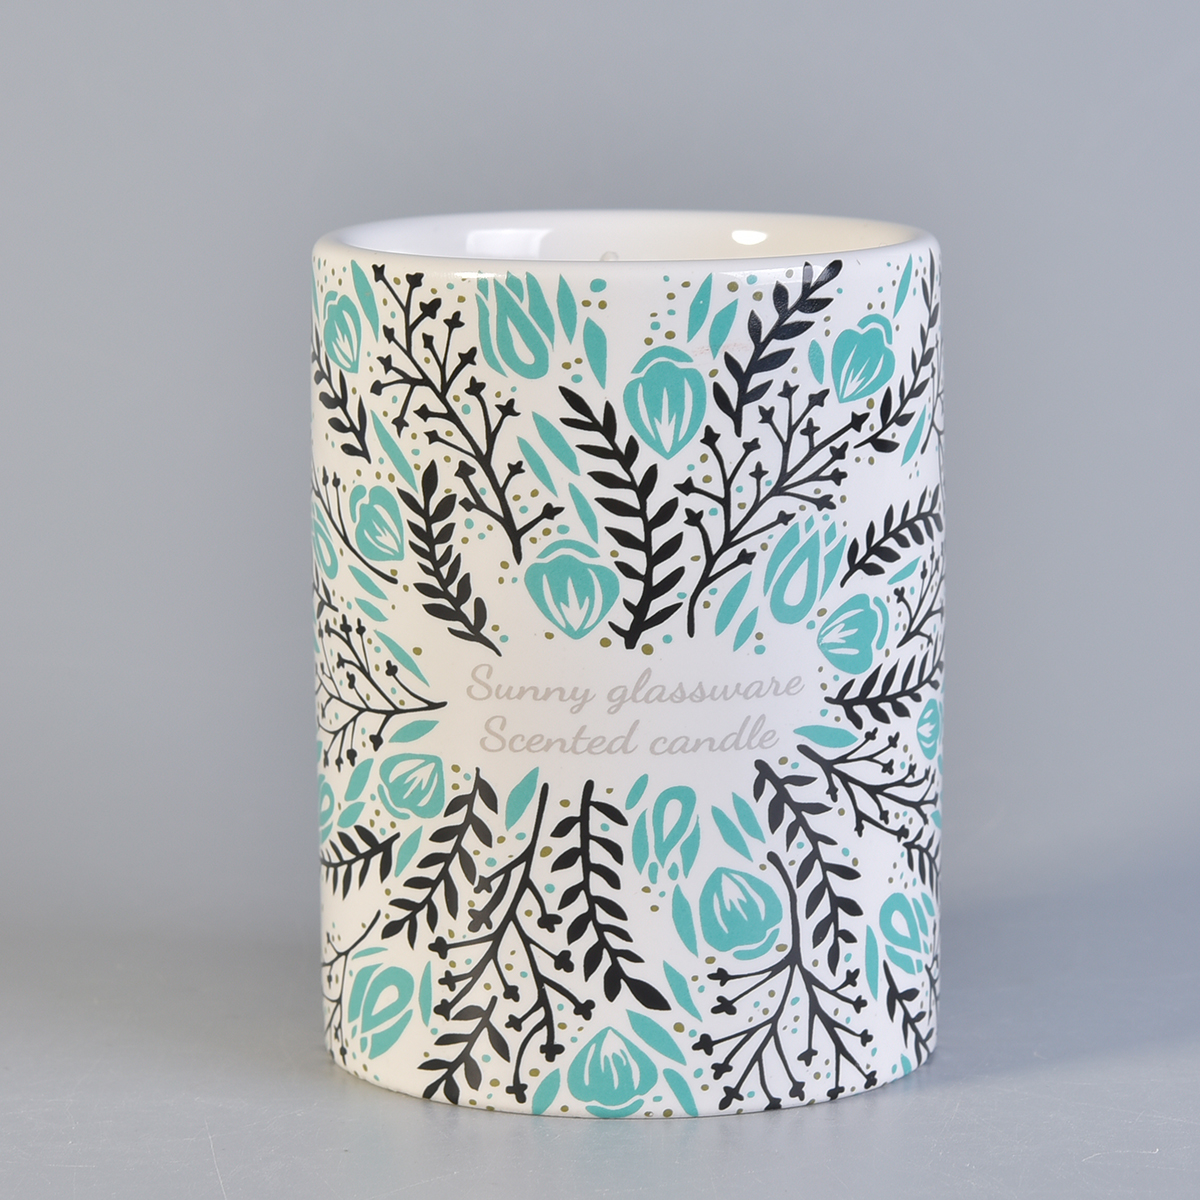 Cylinder ceramic candel vessel with printing